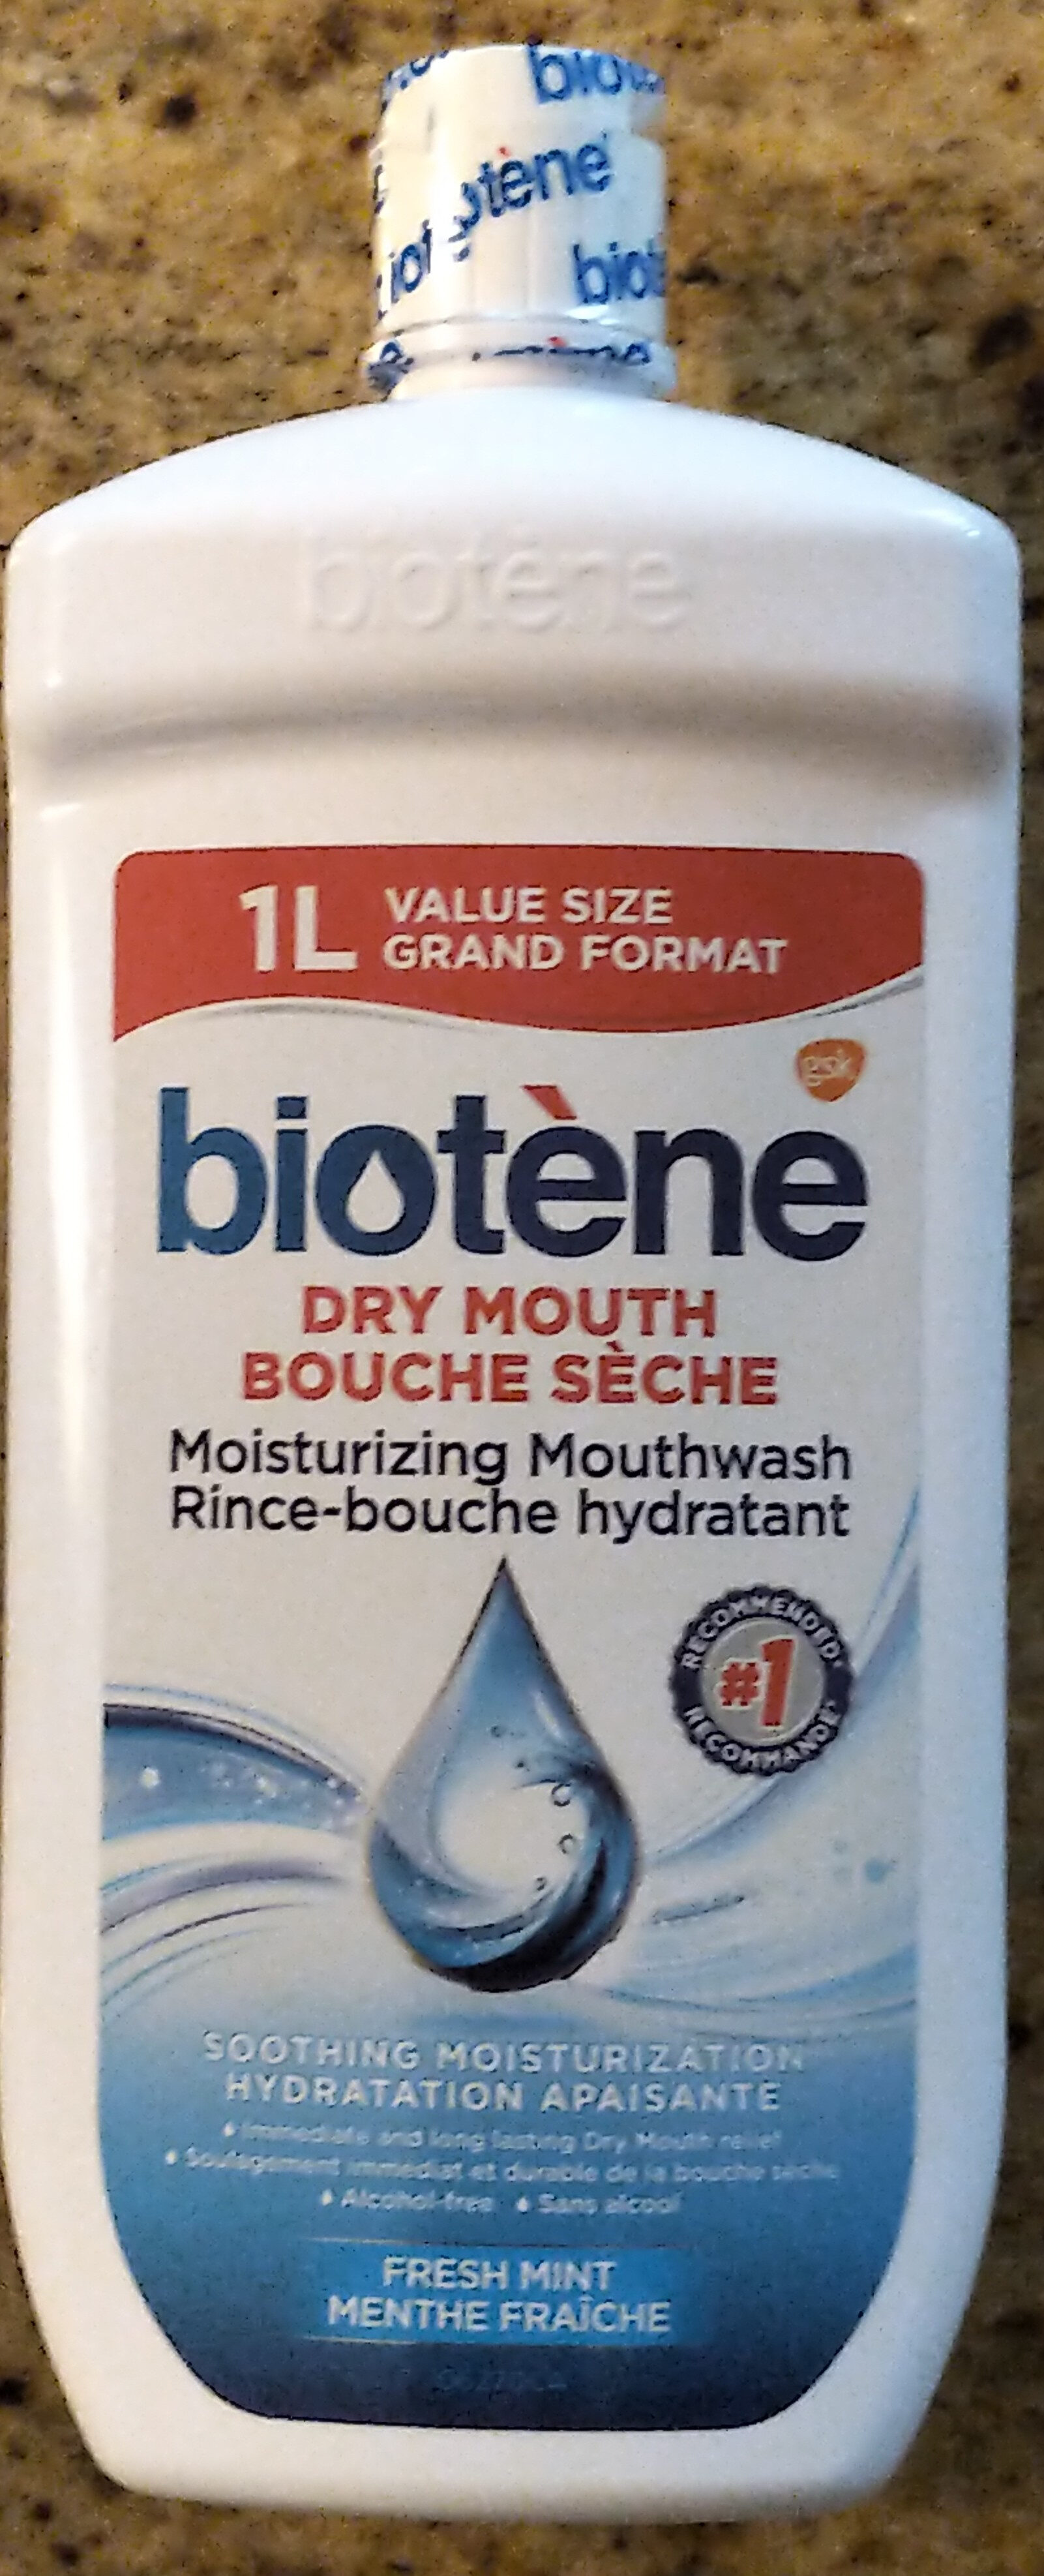 Fresh Mint Dry Mouth Moisturizing Mouthwash - Produto - en